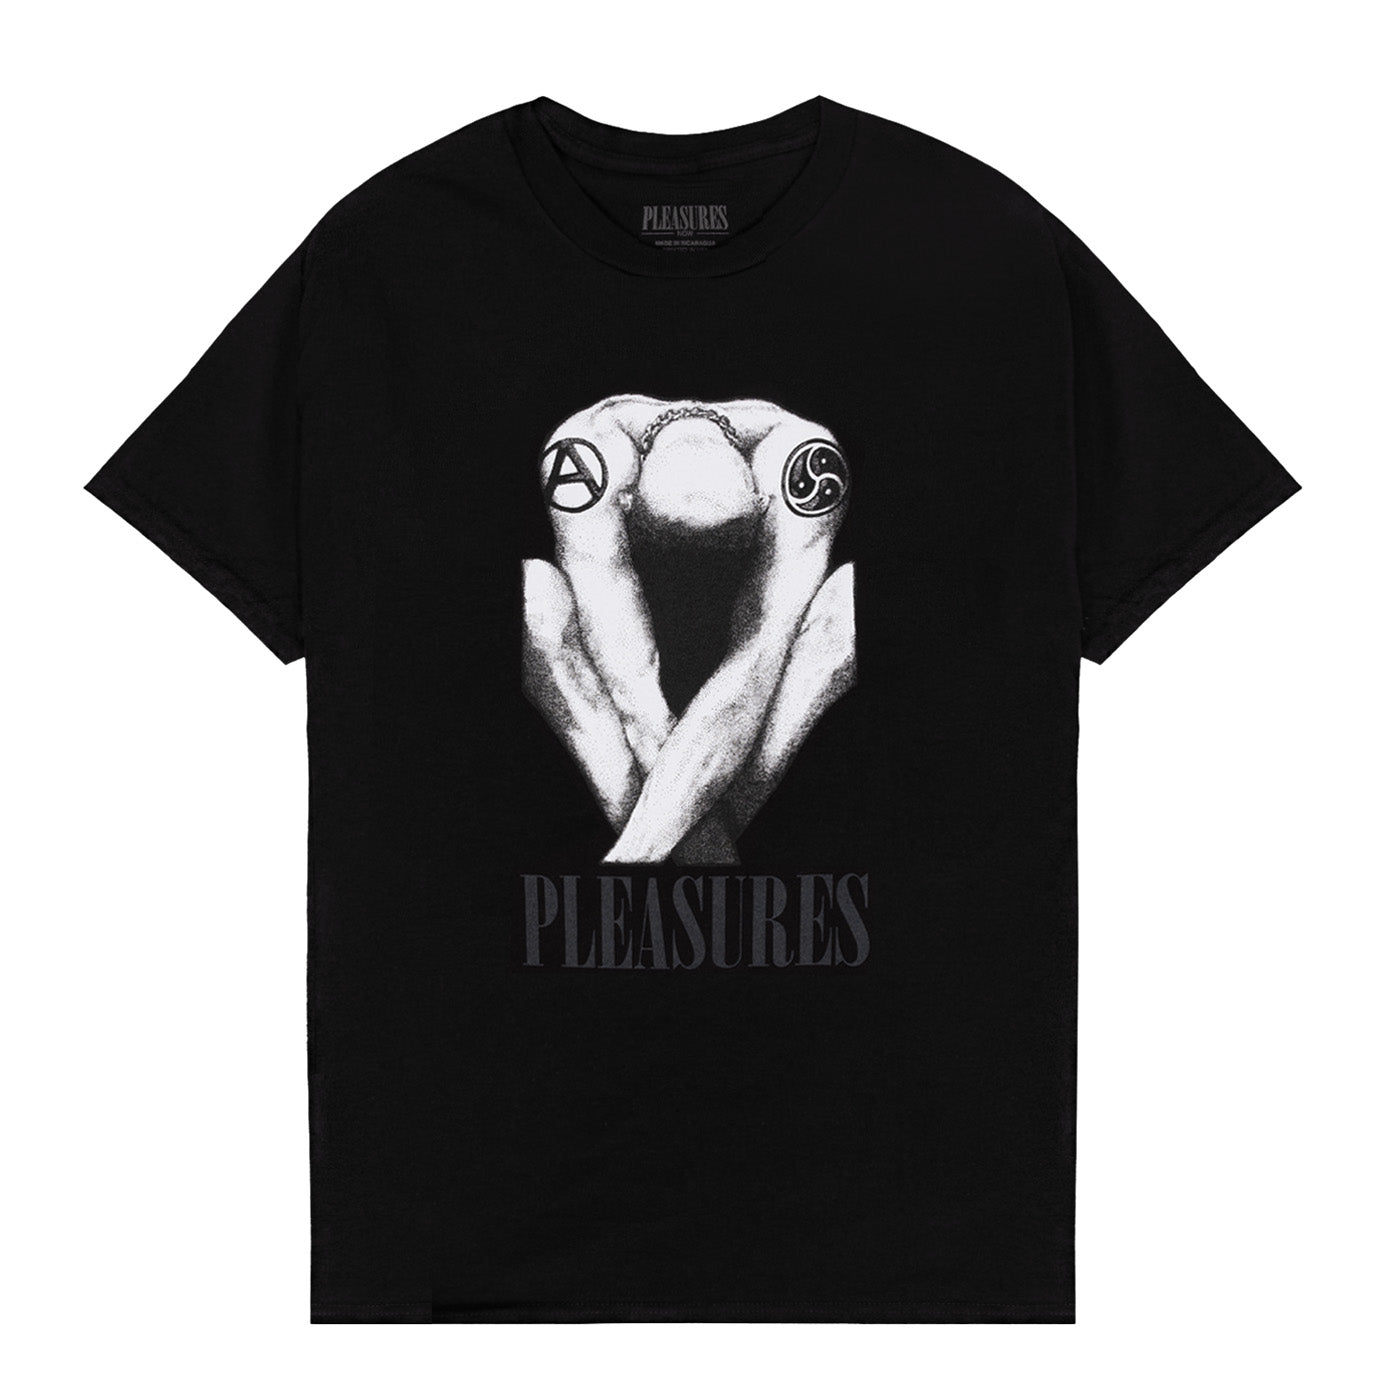 Pleasures Men Bended T-Shirt Black - T-SHIRTS - Canada